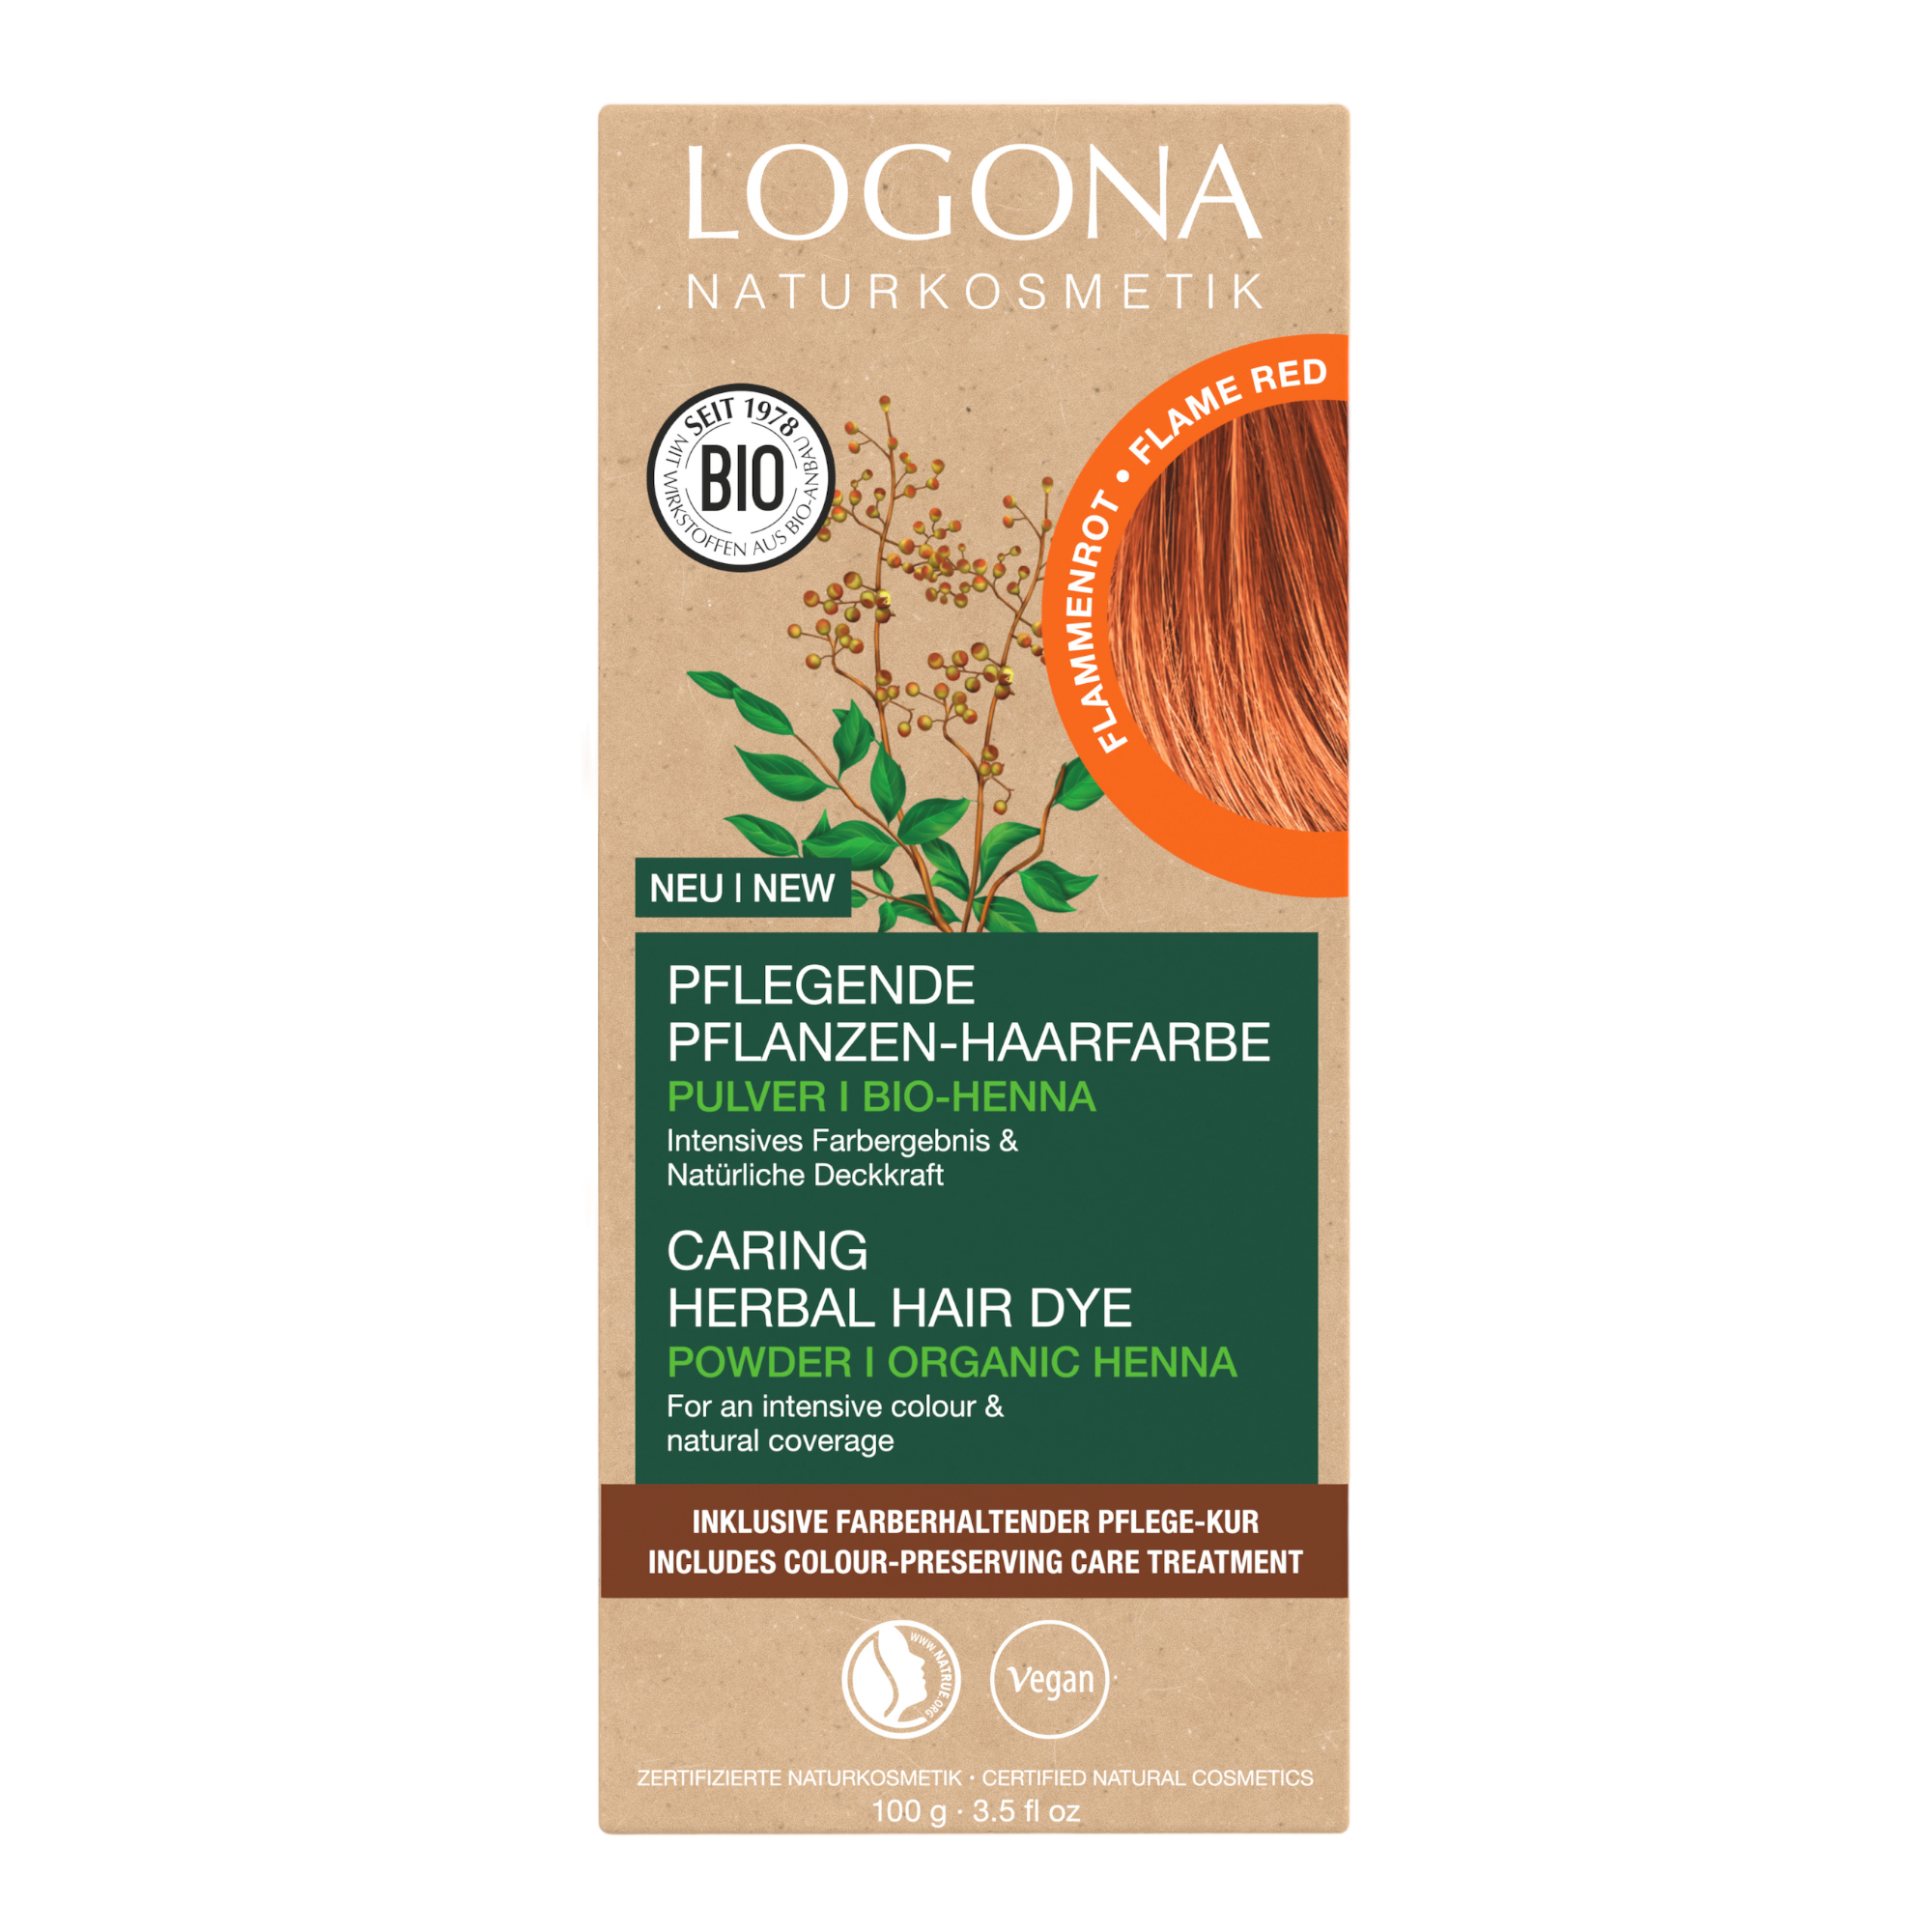 Organic Henna shampoo Naturcosmetic colorless 200ml by Styx